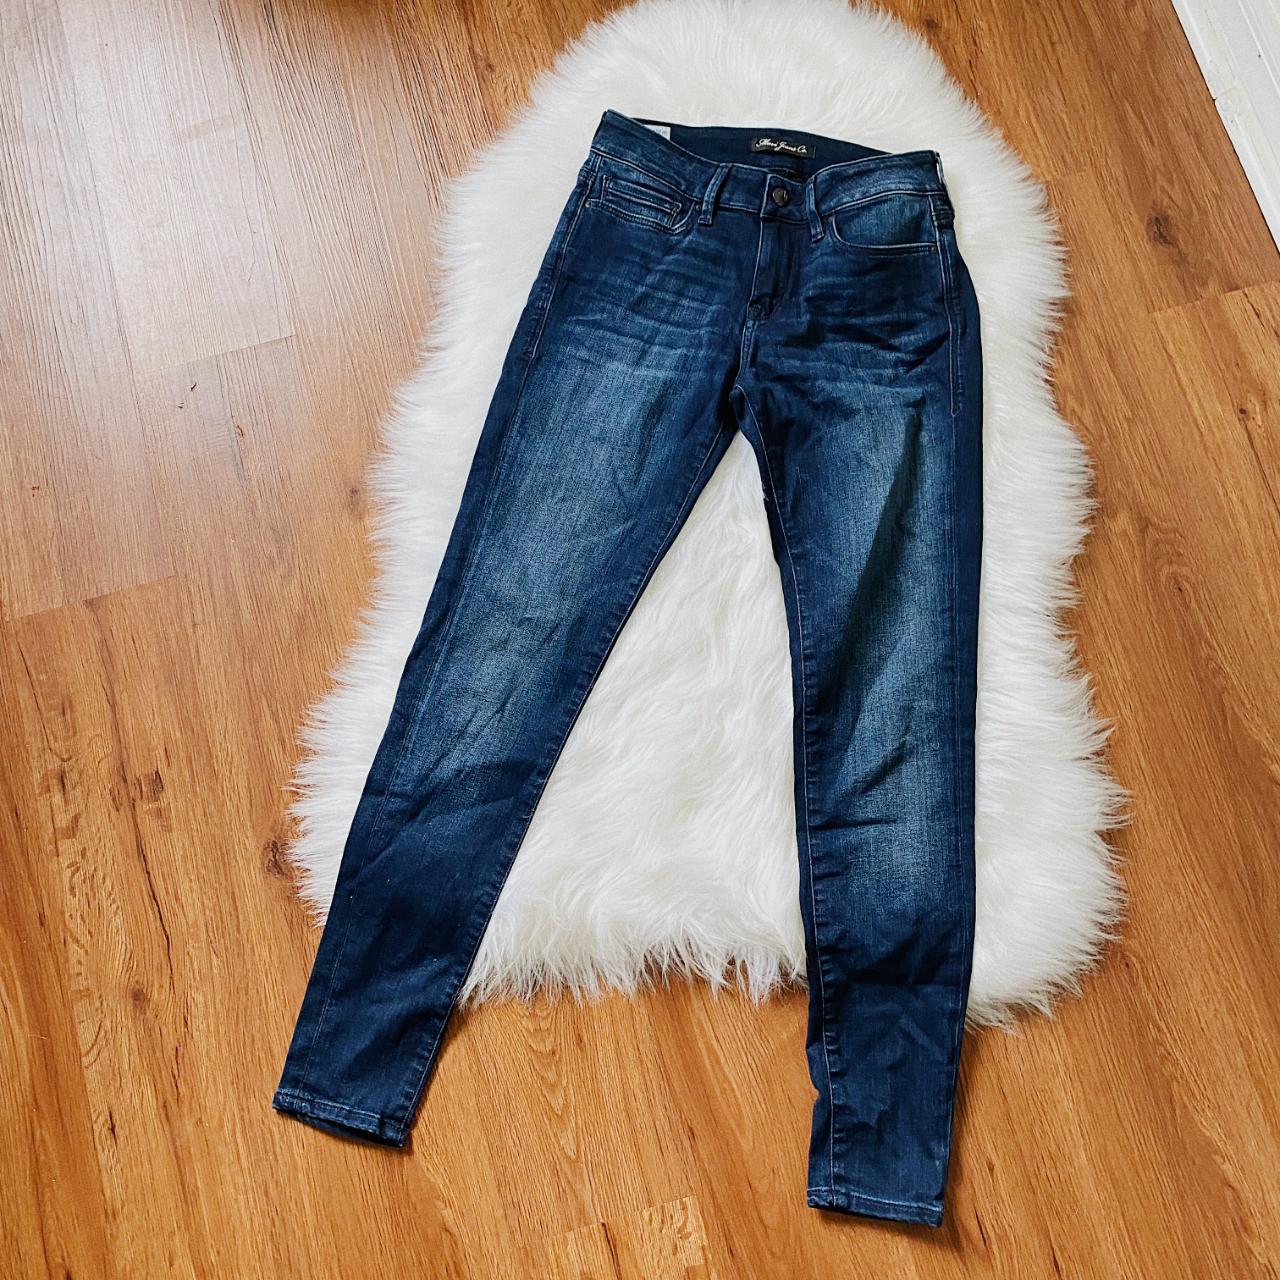 Product Image 2 - Mavi jeans co size 25